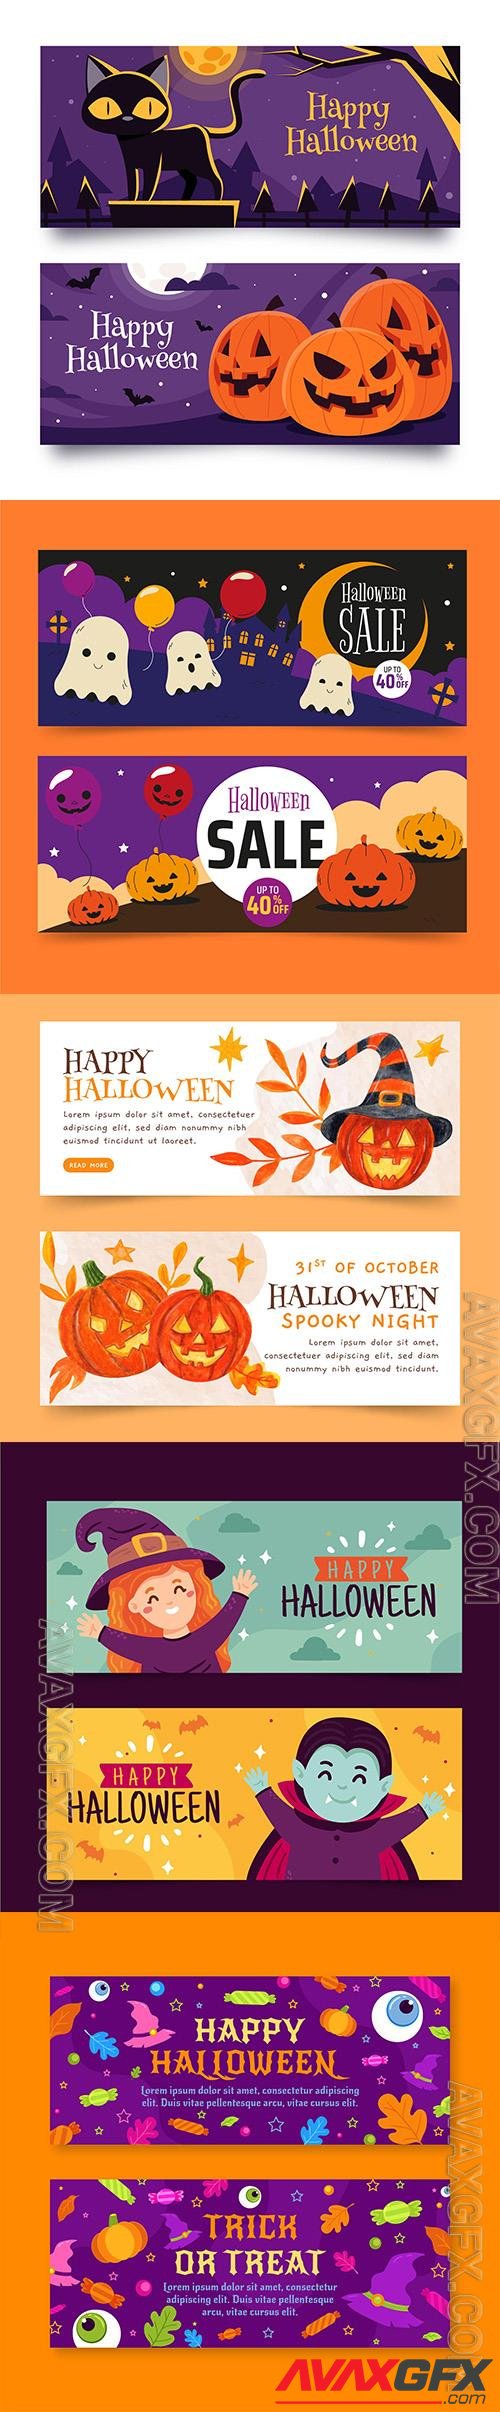 Halloween horizontal banners set vol3